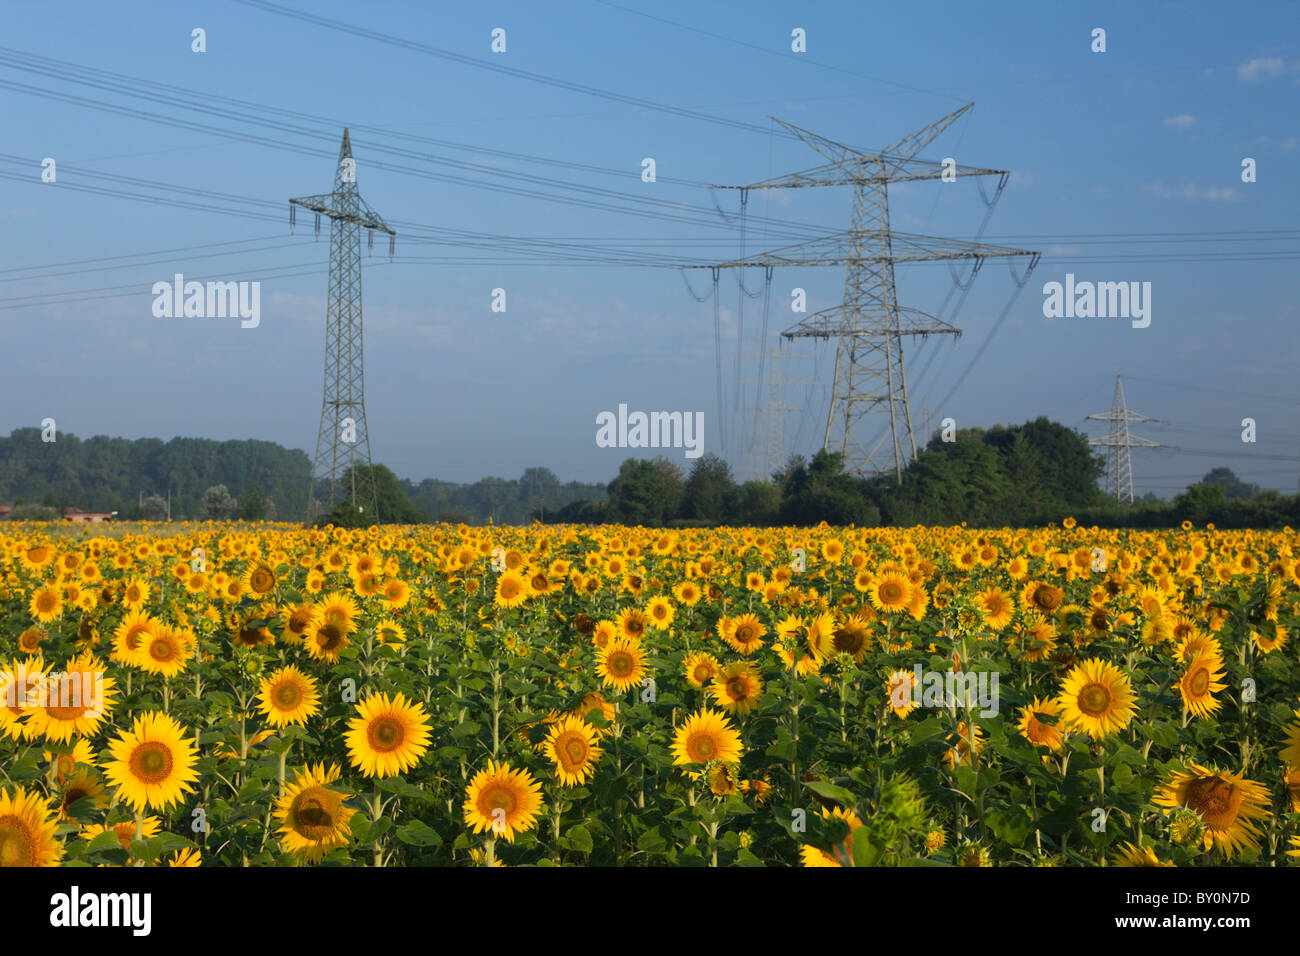 Sunflower Field near Electricity Pylons, Helianthus annuus, Munich, Bavaria, Germany Stock Photo